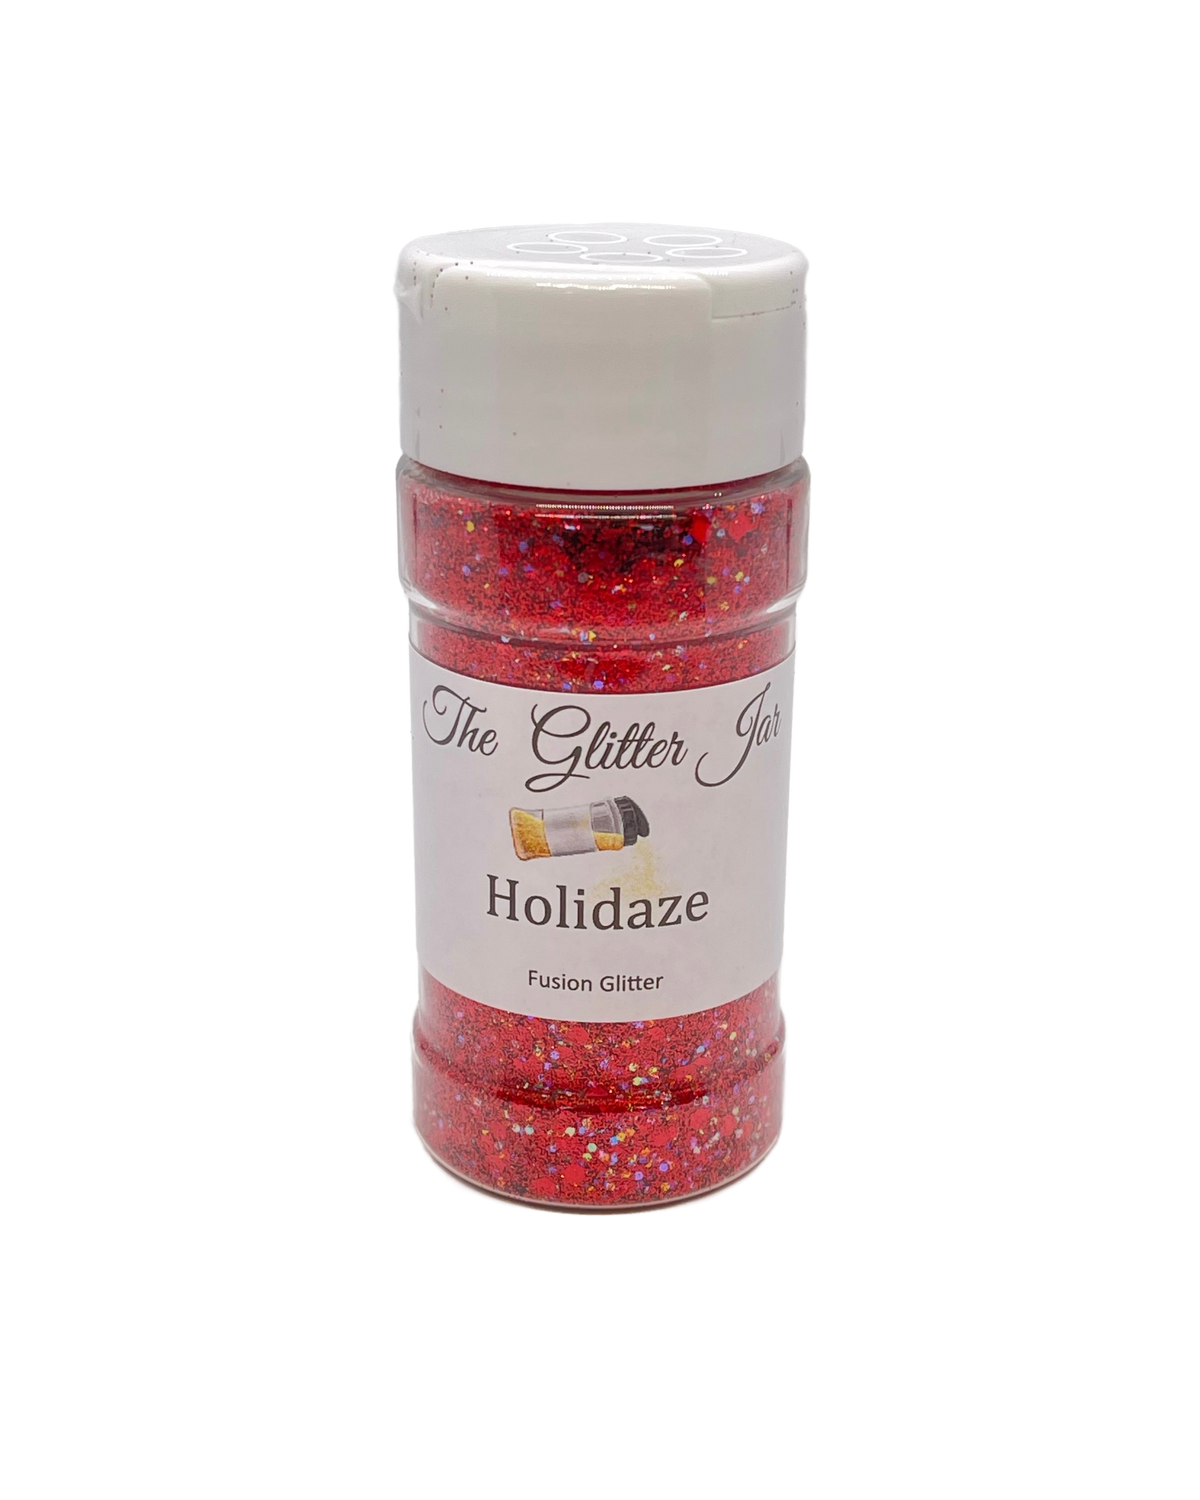 Holidaze Fusion Glitter The Glitter Jar